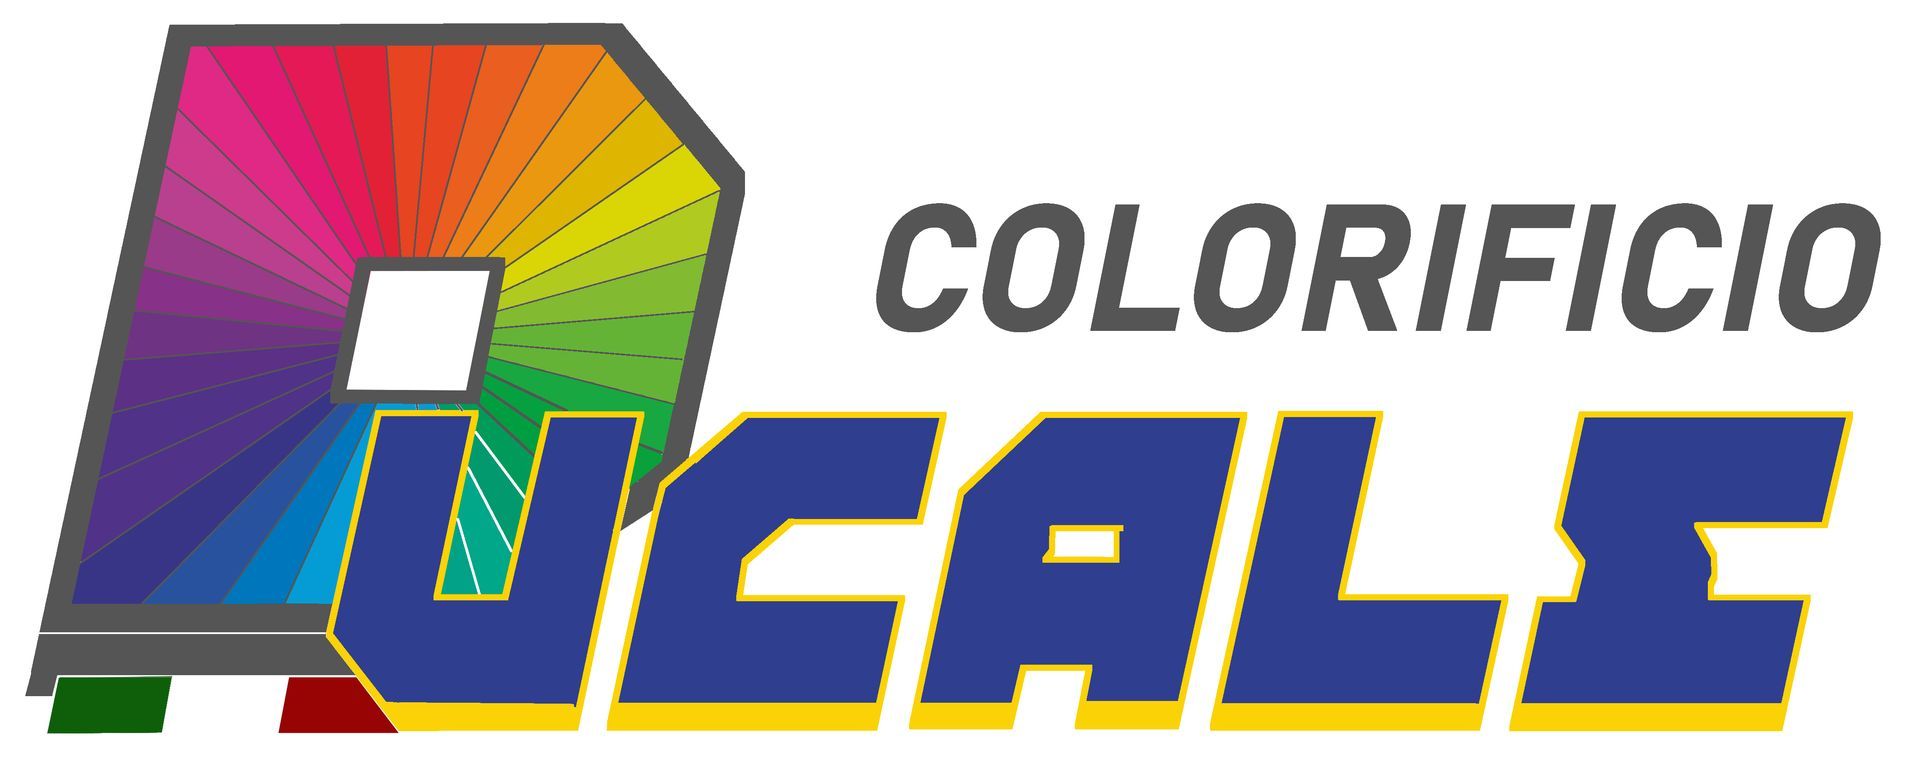 Colorificio Ducale-Logo